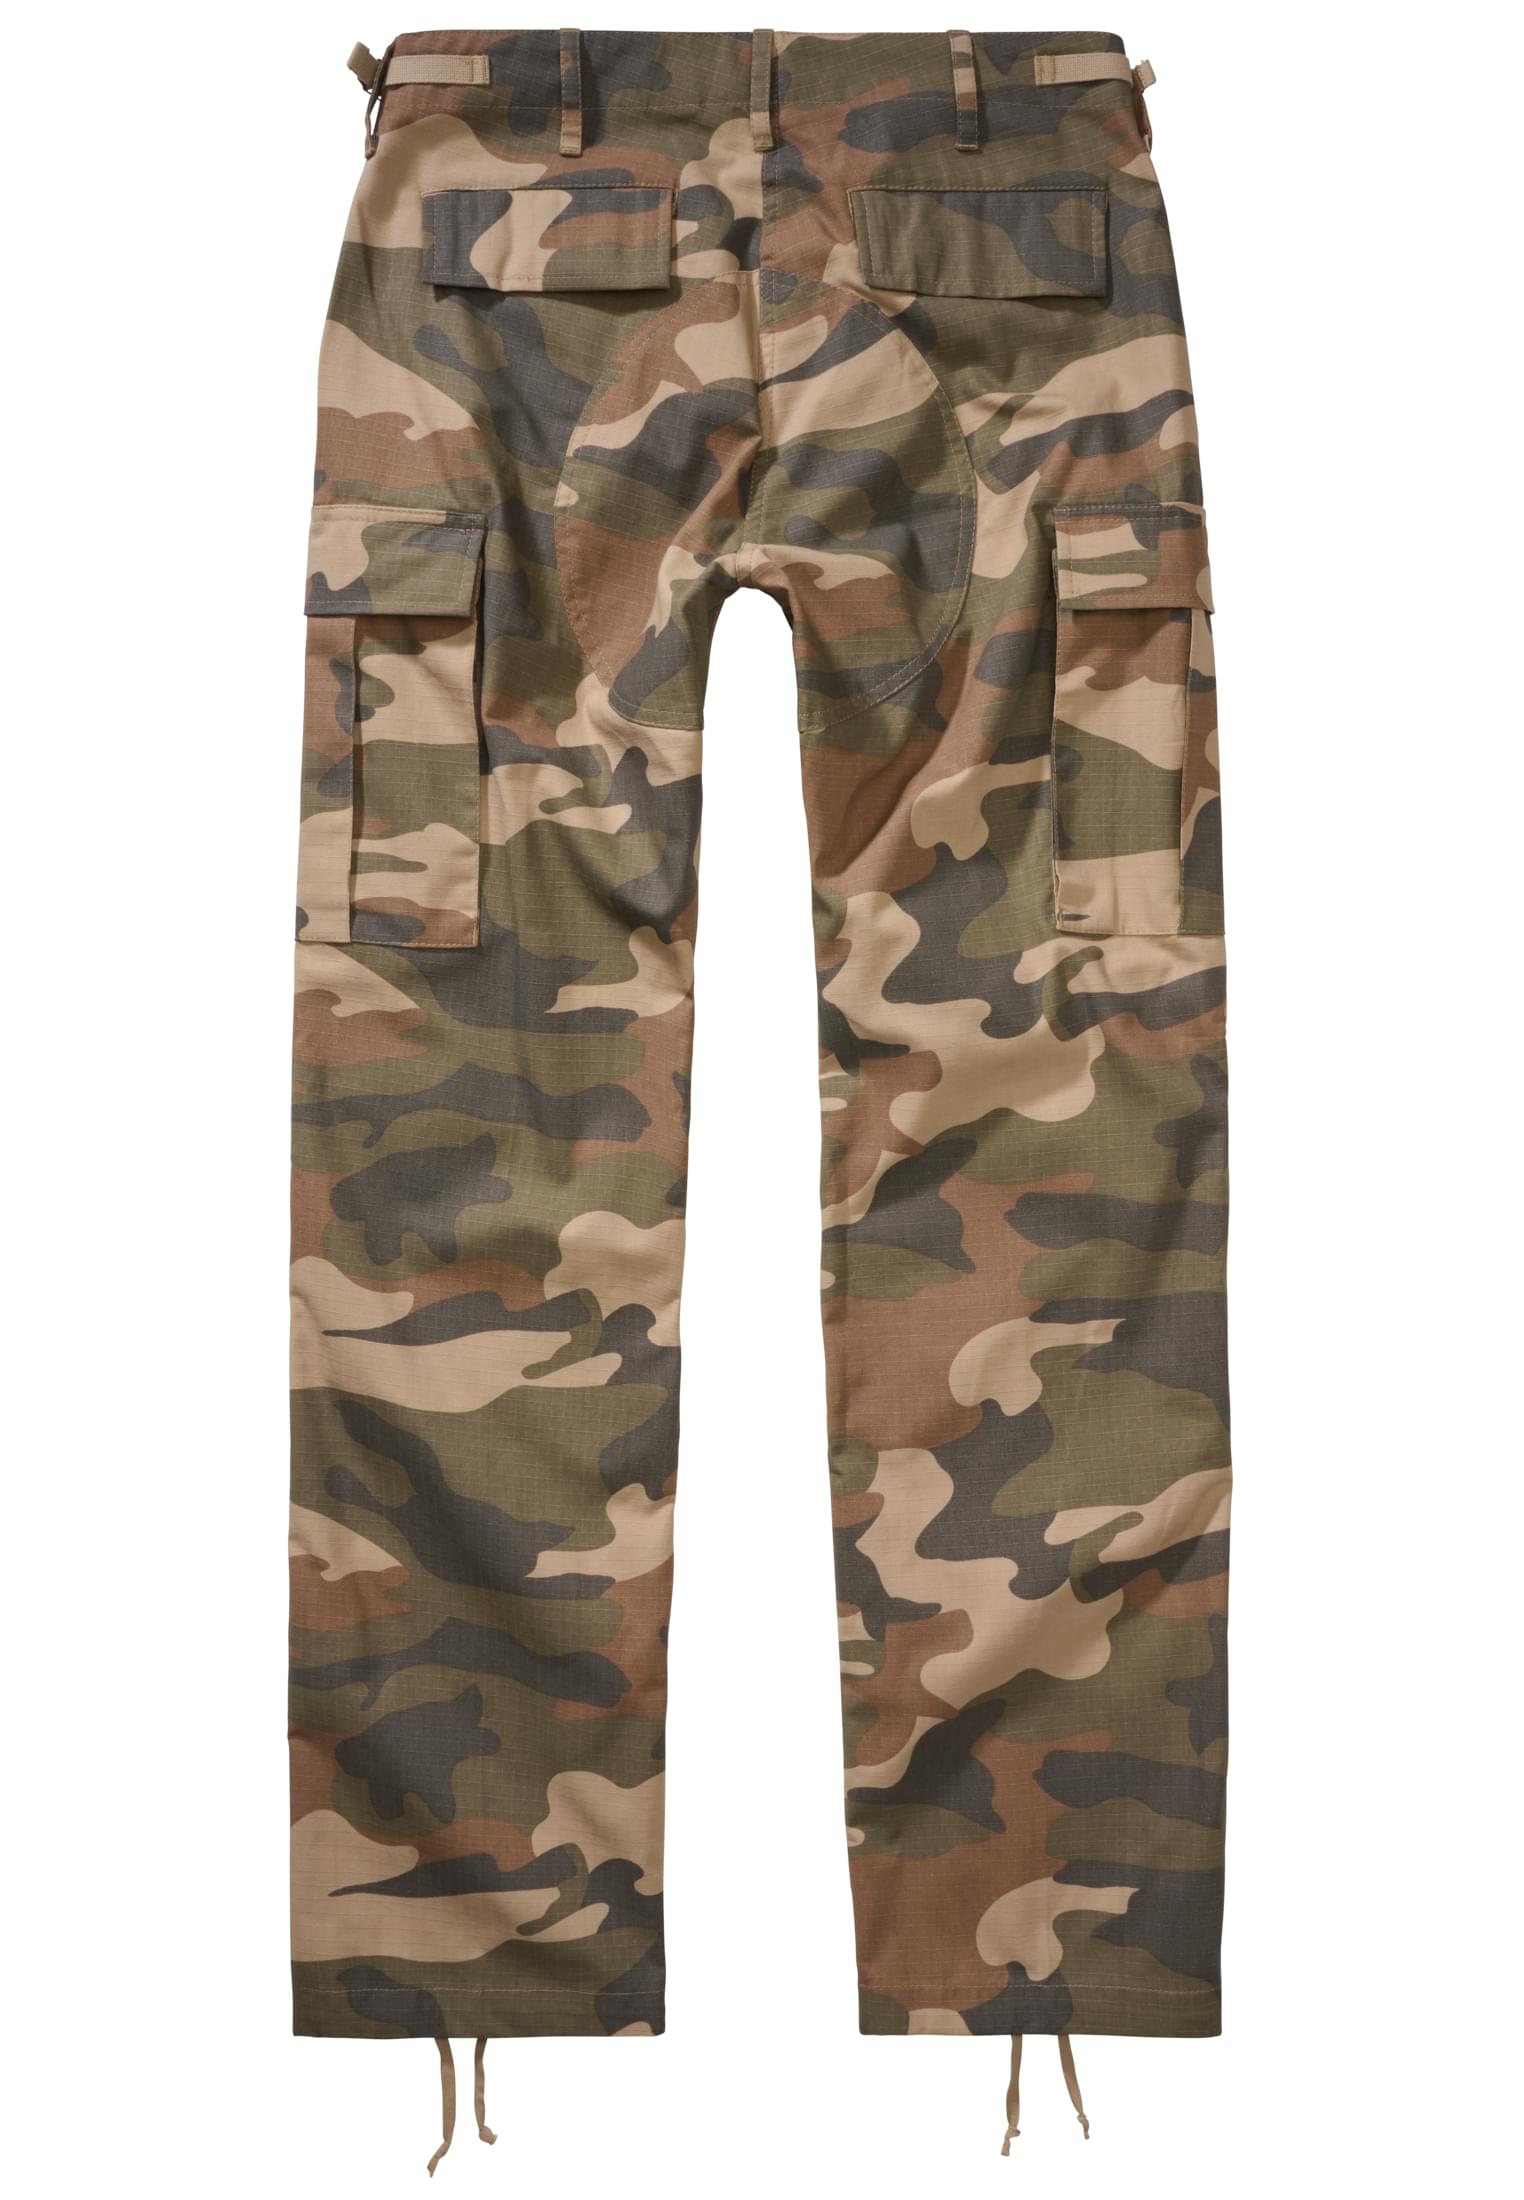 Jacken Ladies BDU Ripstop Trouser in Farbe light woodland